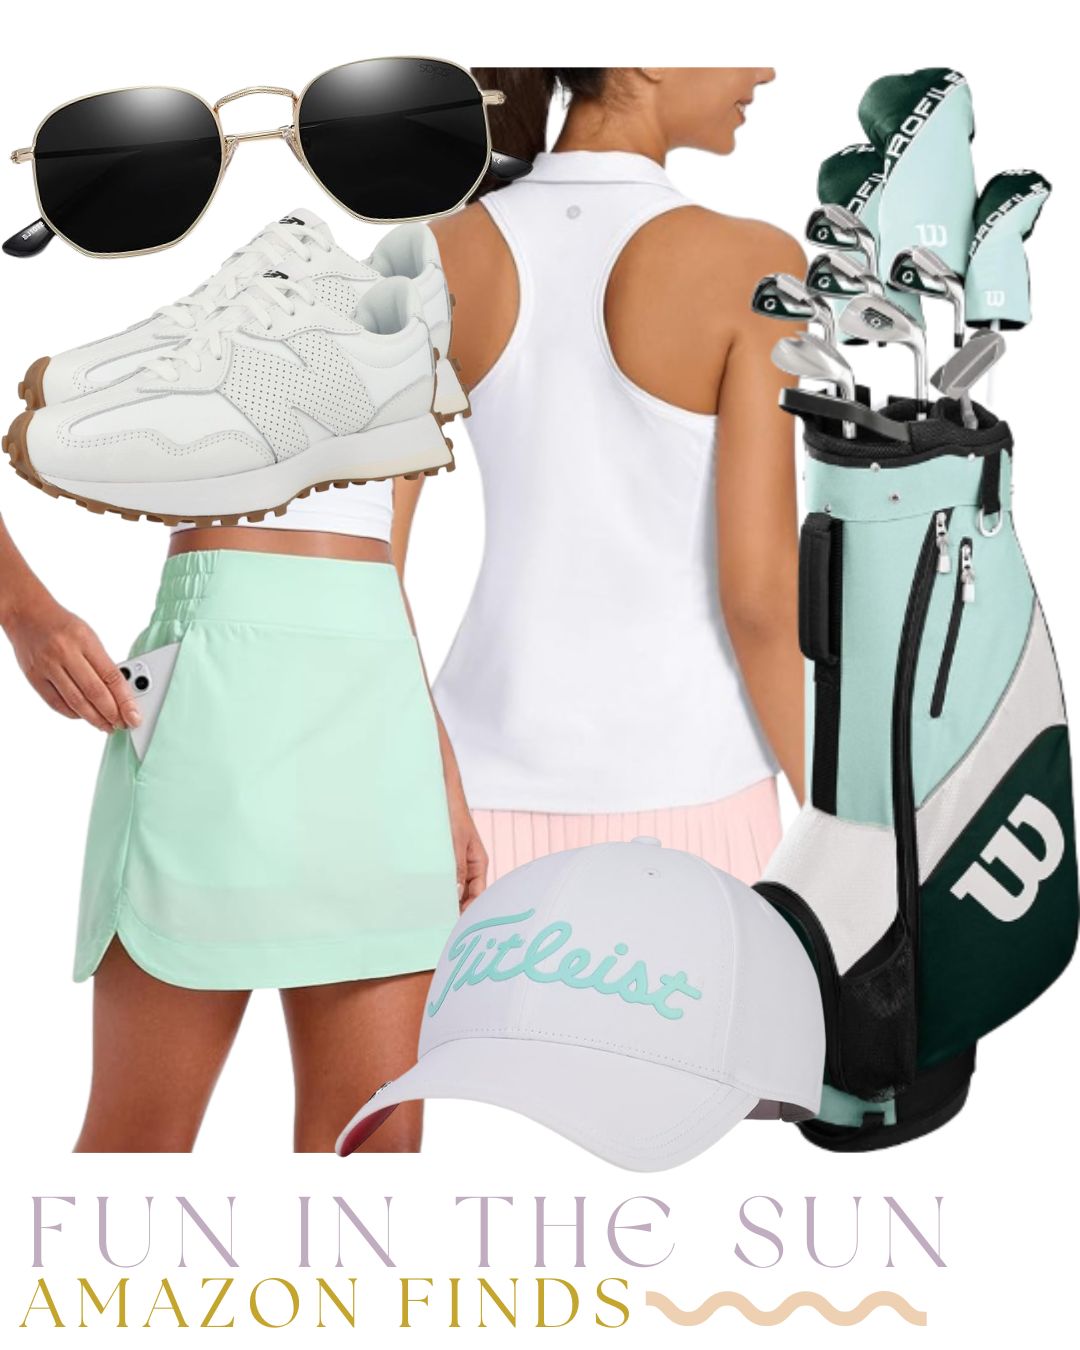 Fun in the sun - ladies golf edition! | Amazon (US)